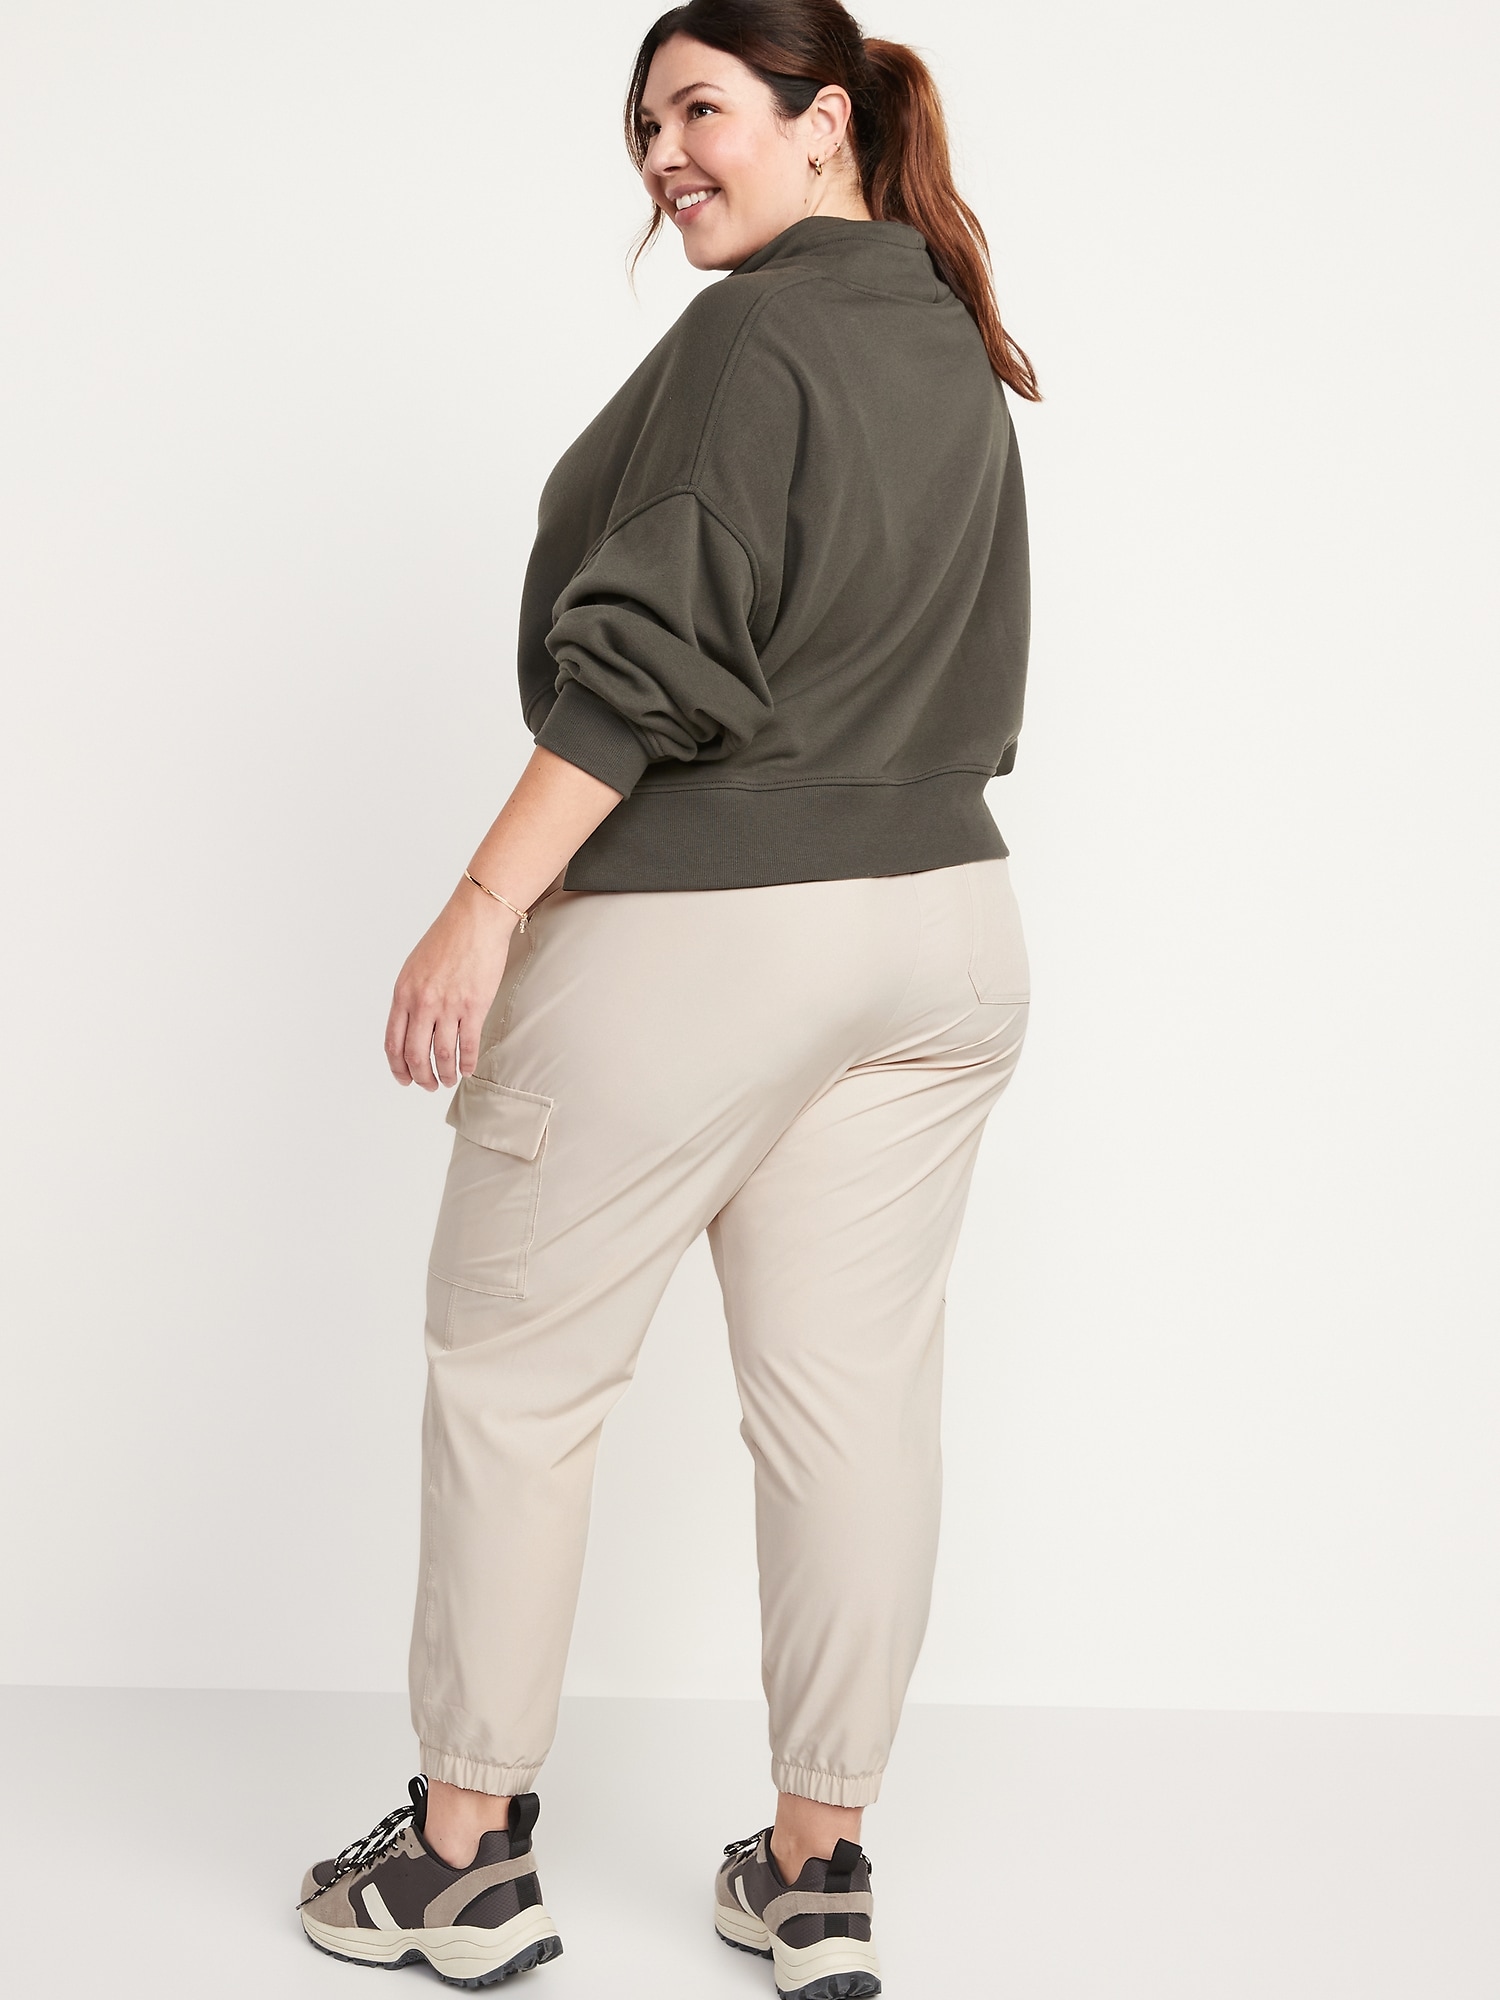 Cargo Sweatpants for Women, Plus Size High Waist Athletic Pants